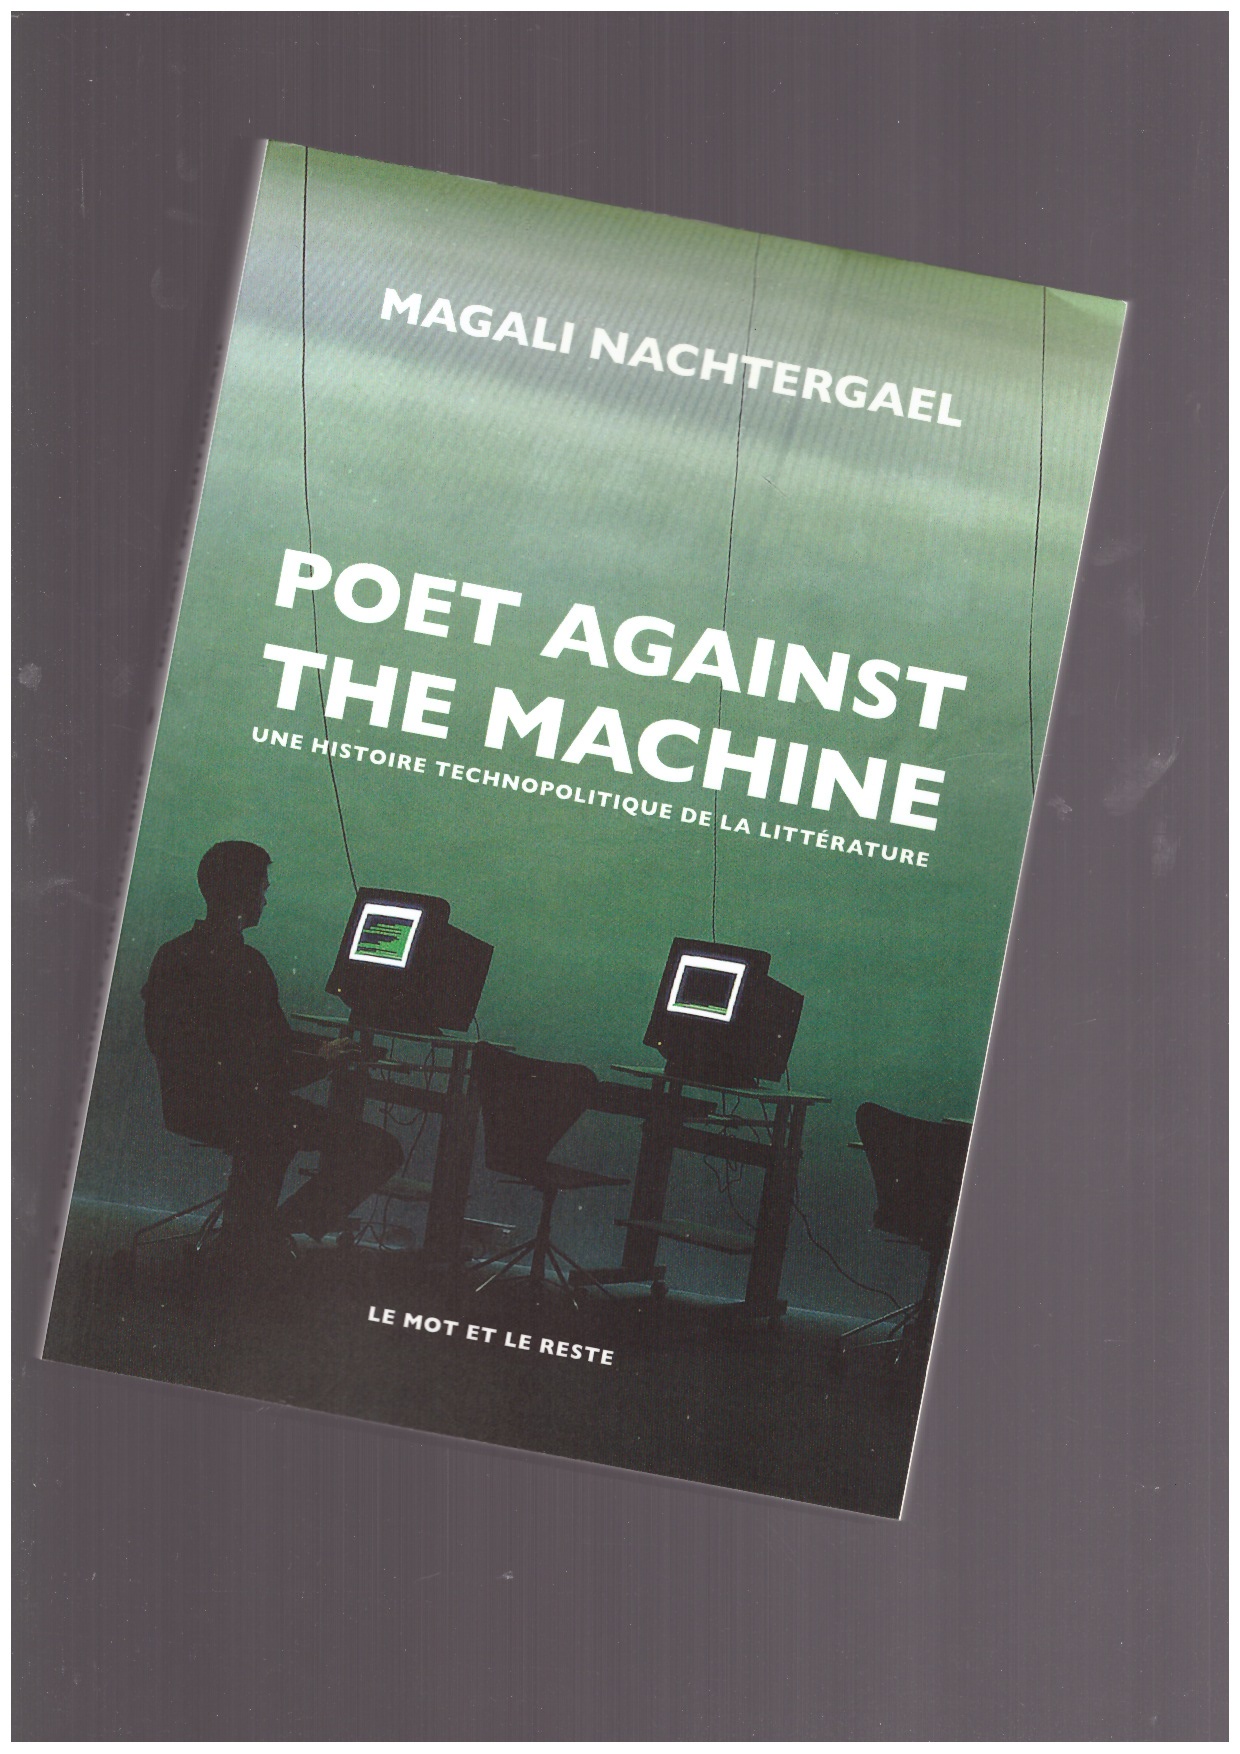 NACHTERGAEL, Magali - Poet against the machine